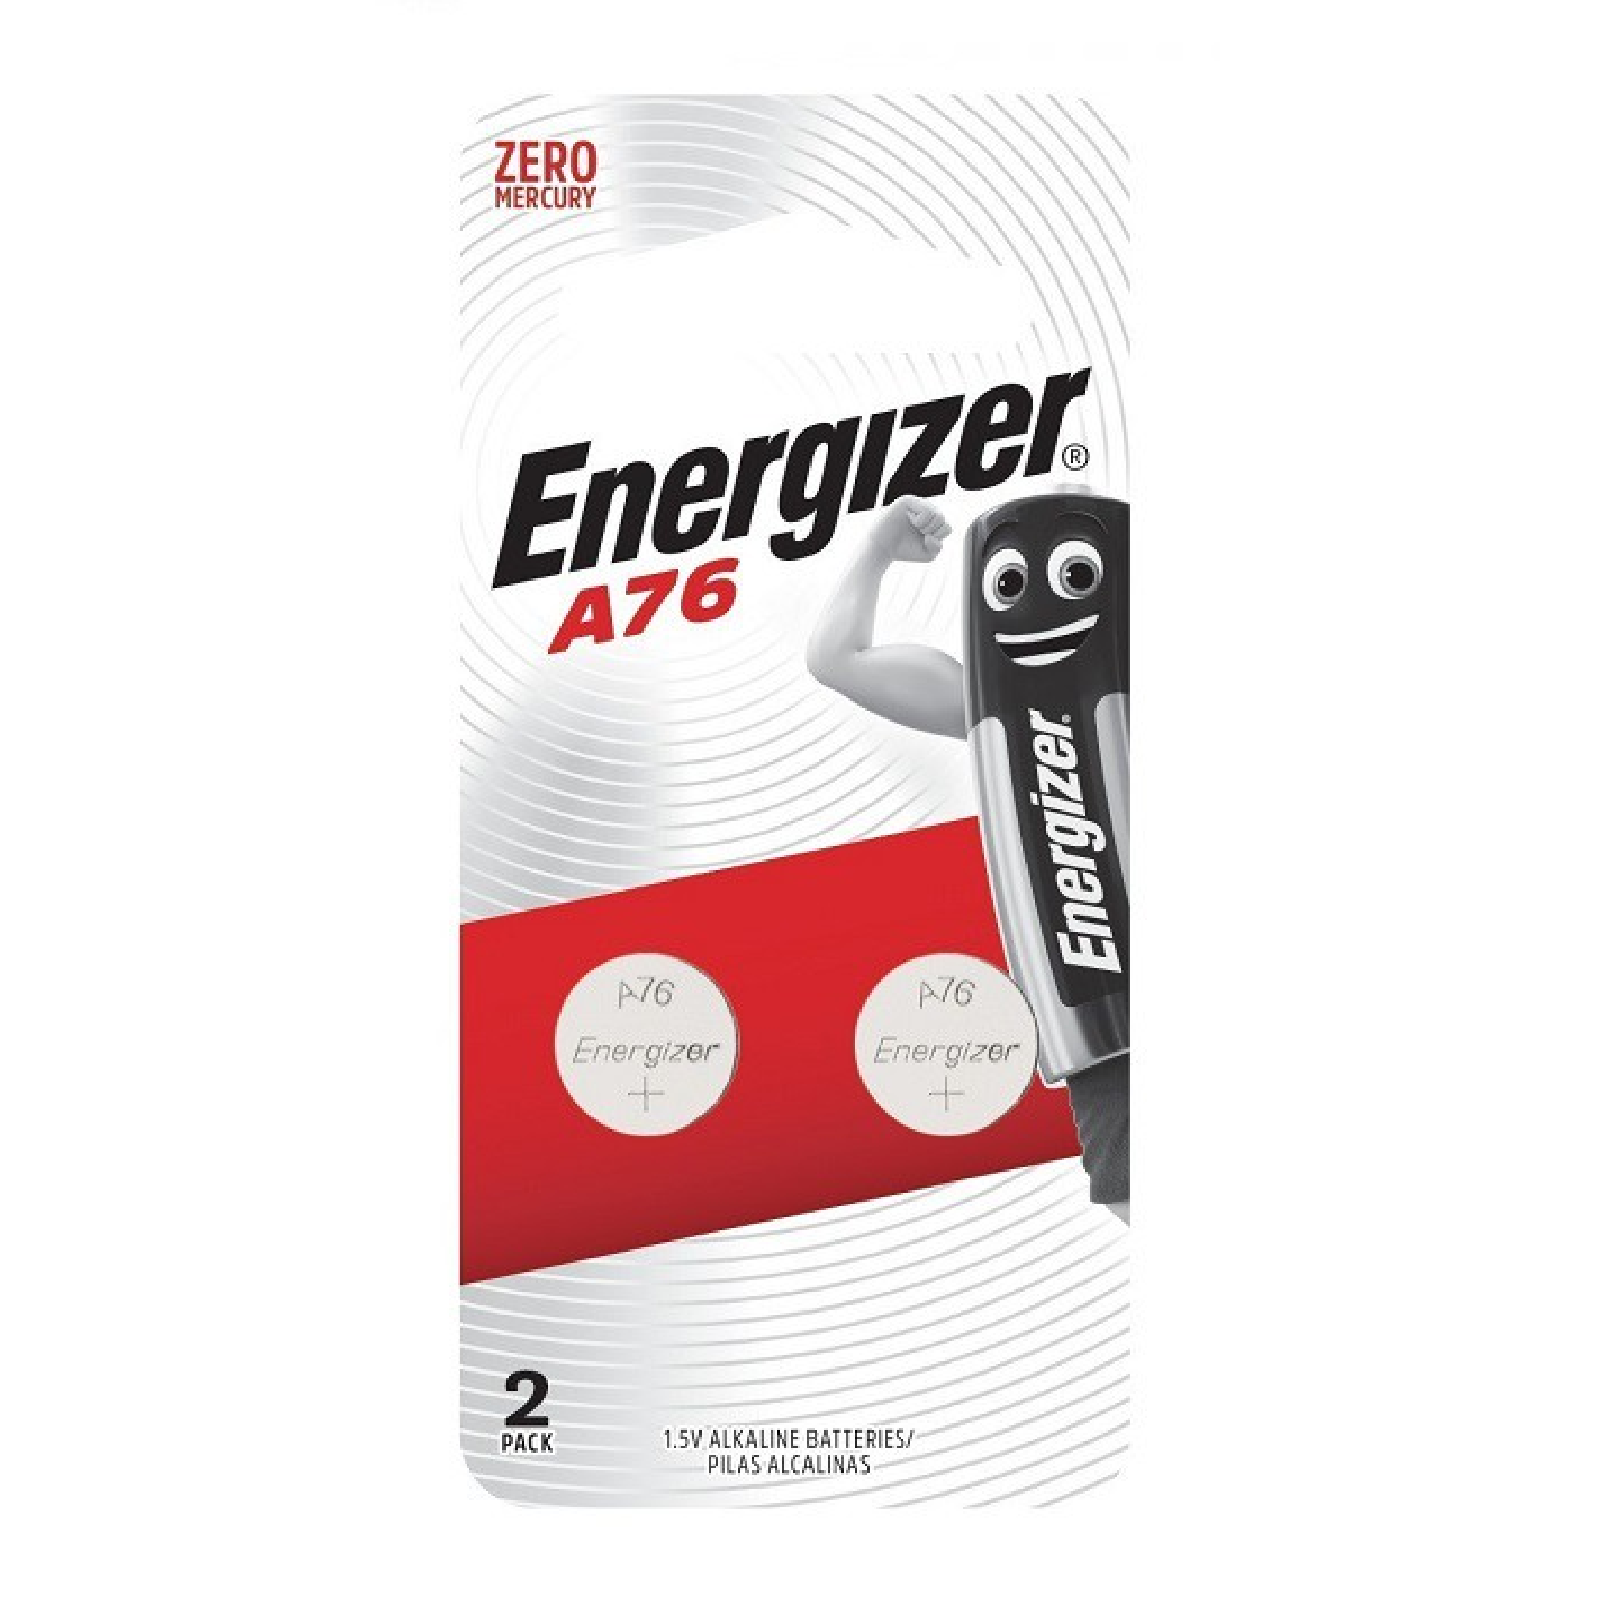 Energizer A76, LR44 Equivalent Alkaline Battery 2PC/Pack